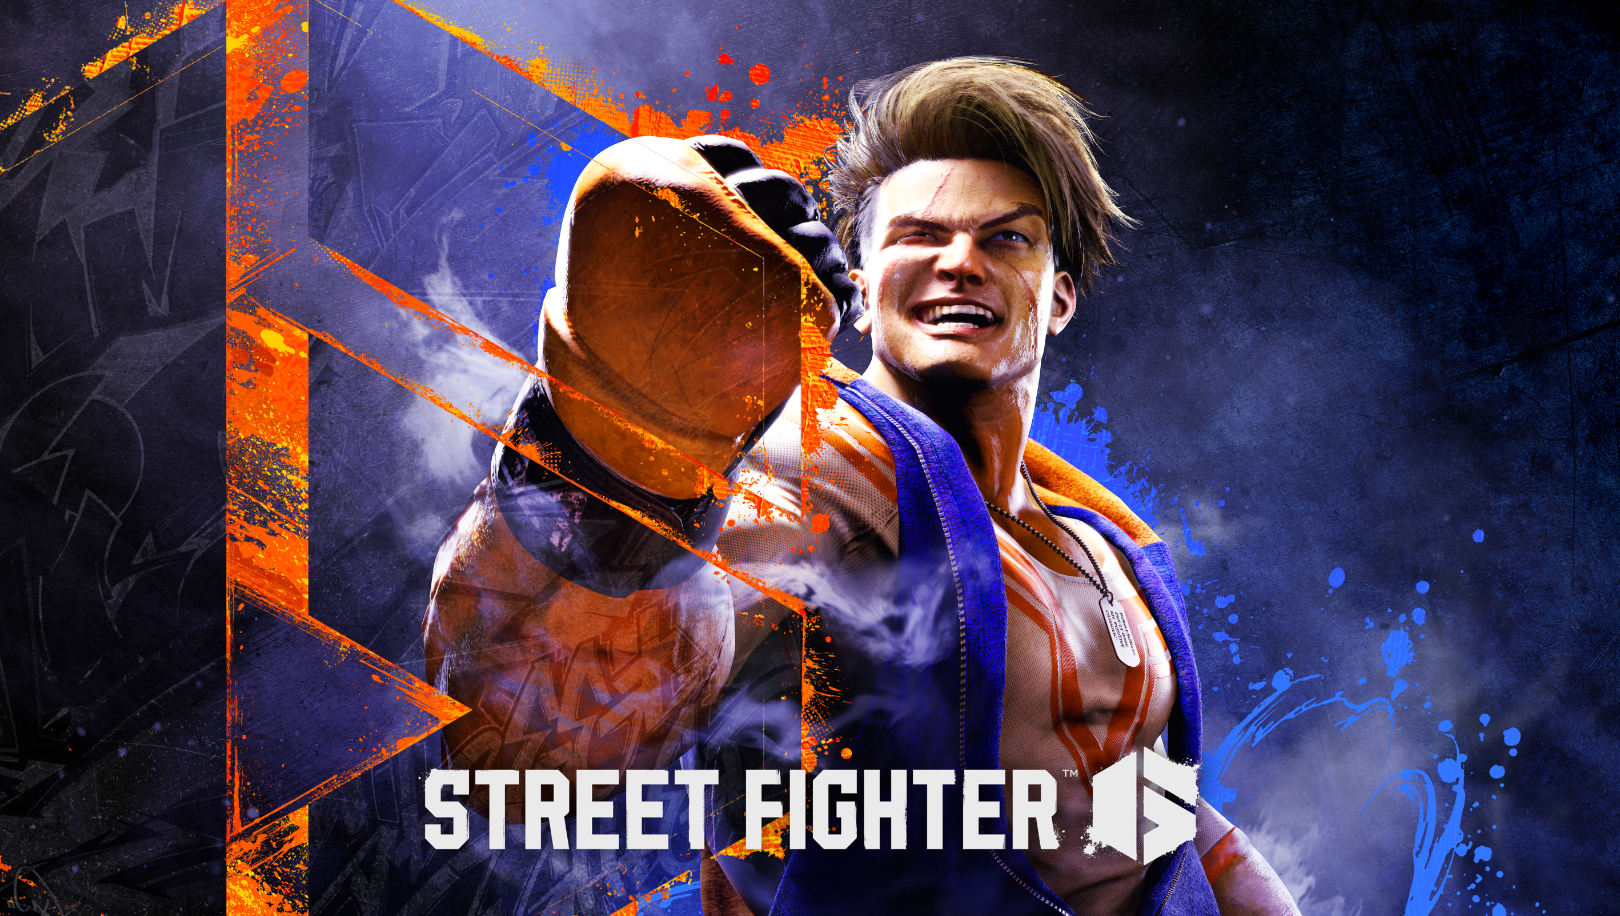 STREET FIGHTER 6